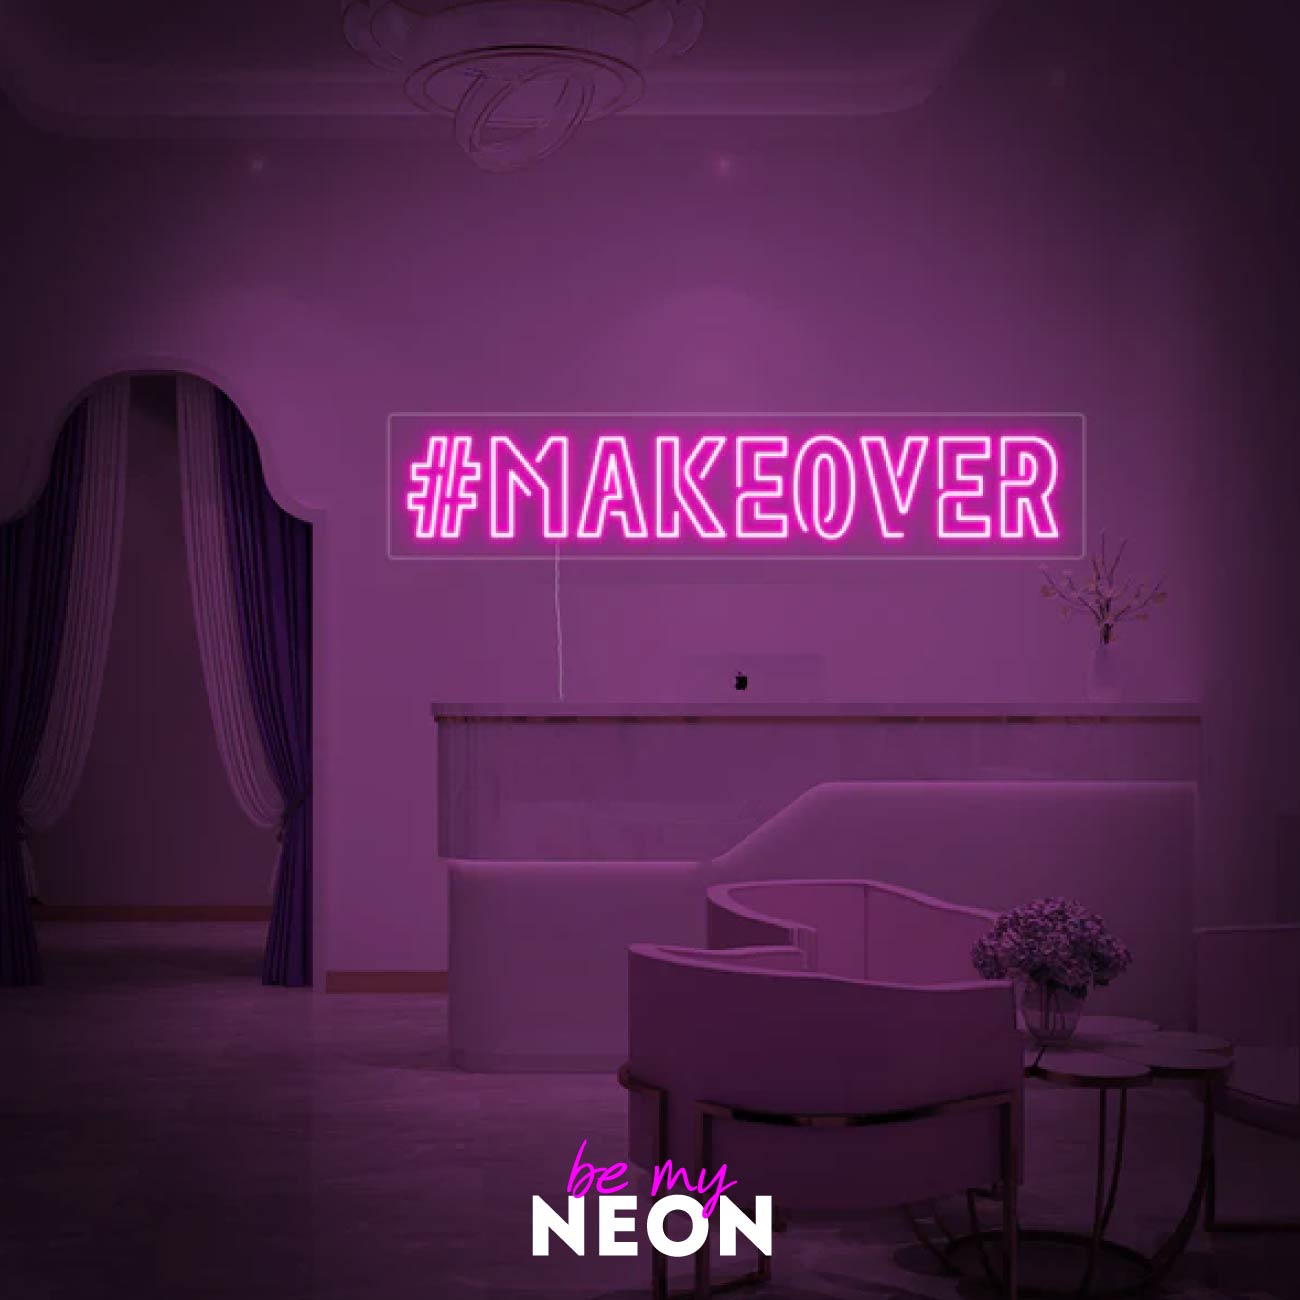 "Makeover - Kosmetikstudio Beauty Salon" LED Neonschild